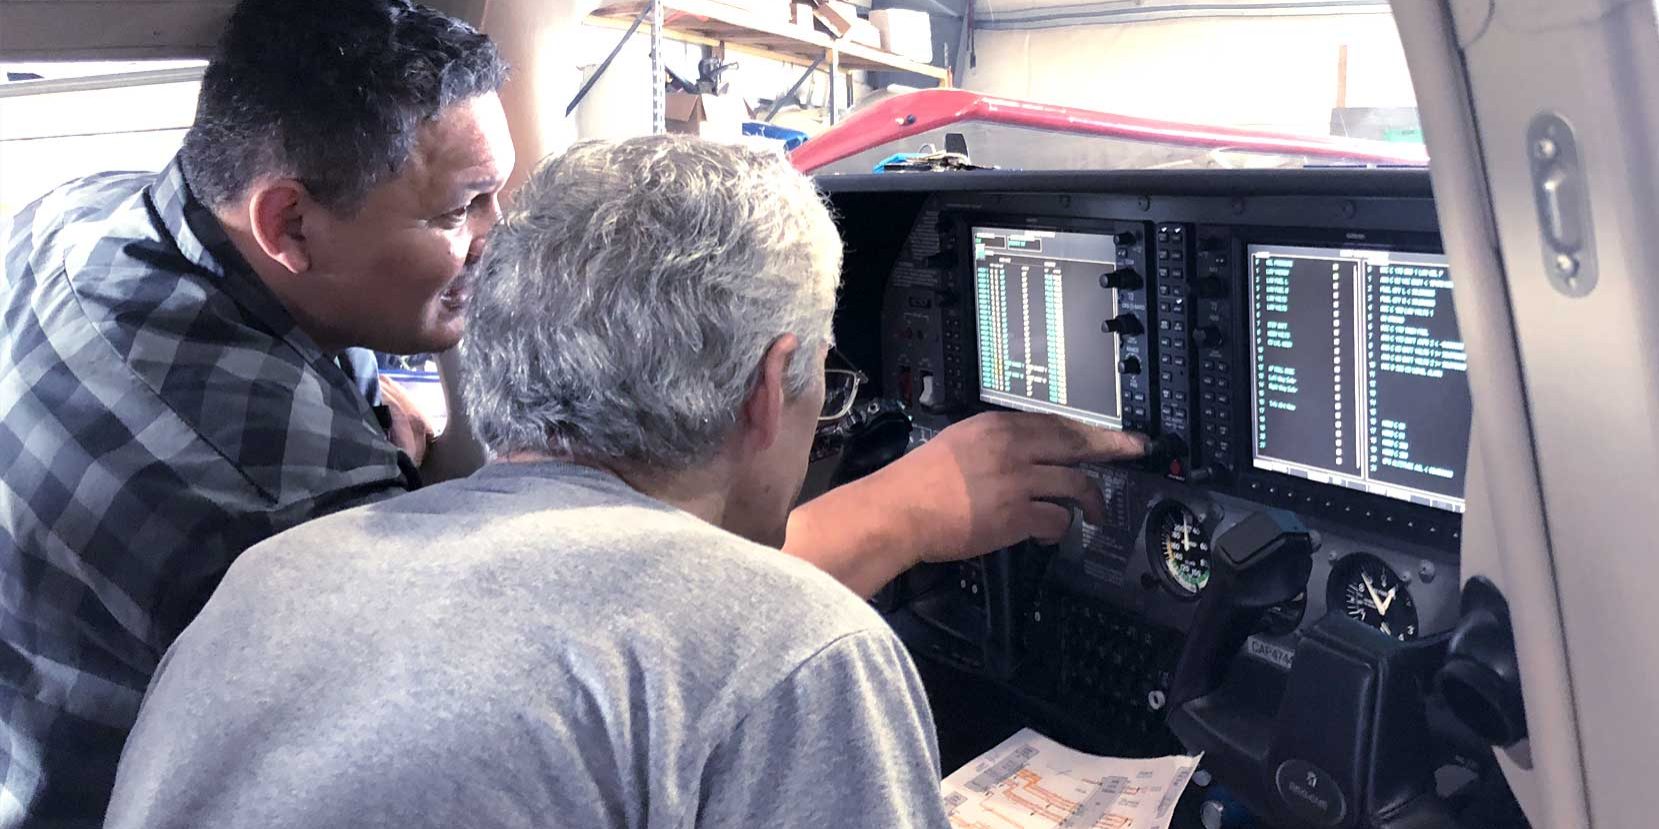 Avionics inspections with 2 technicians.